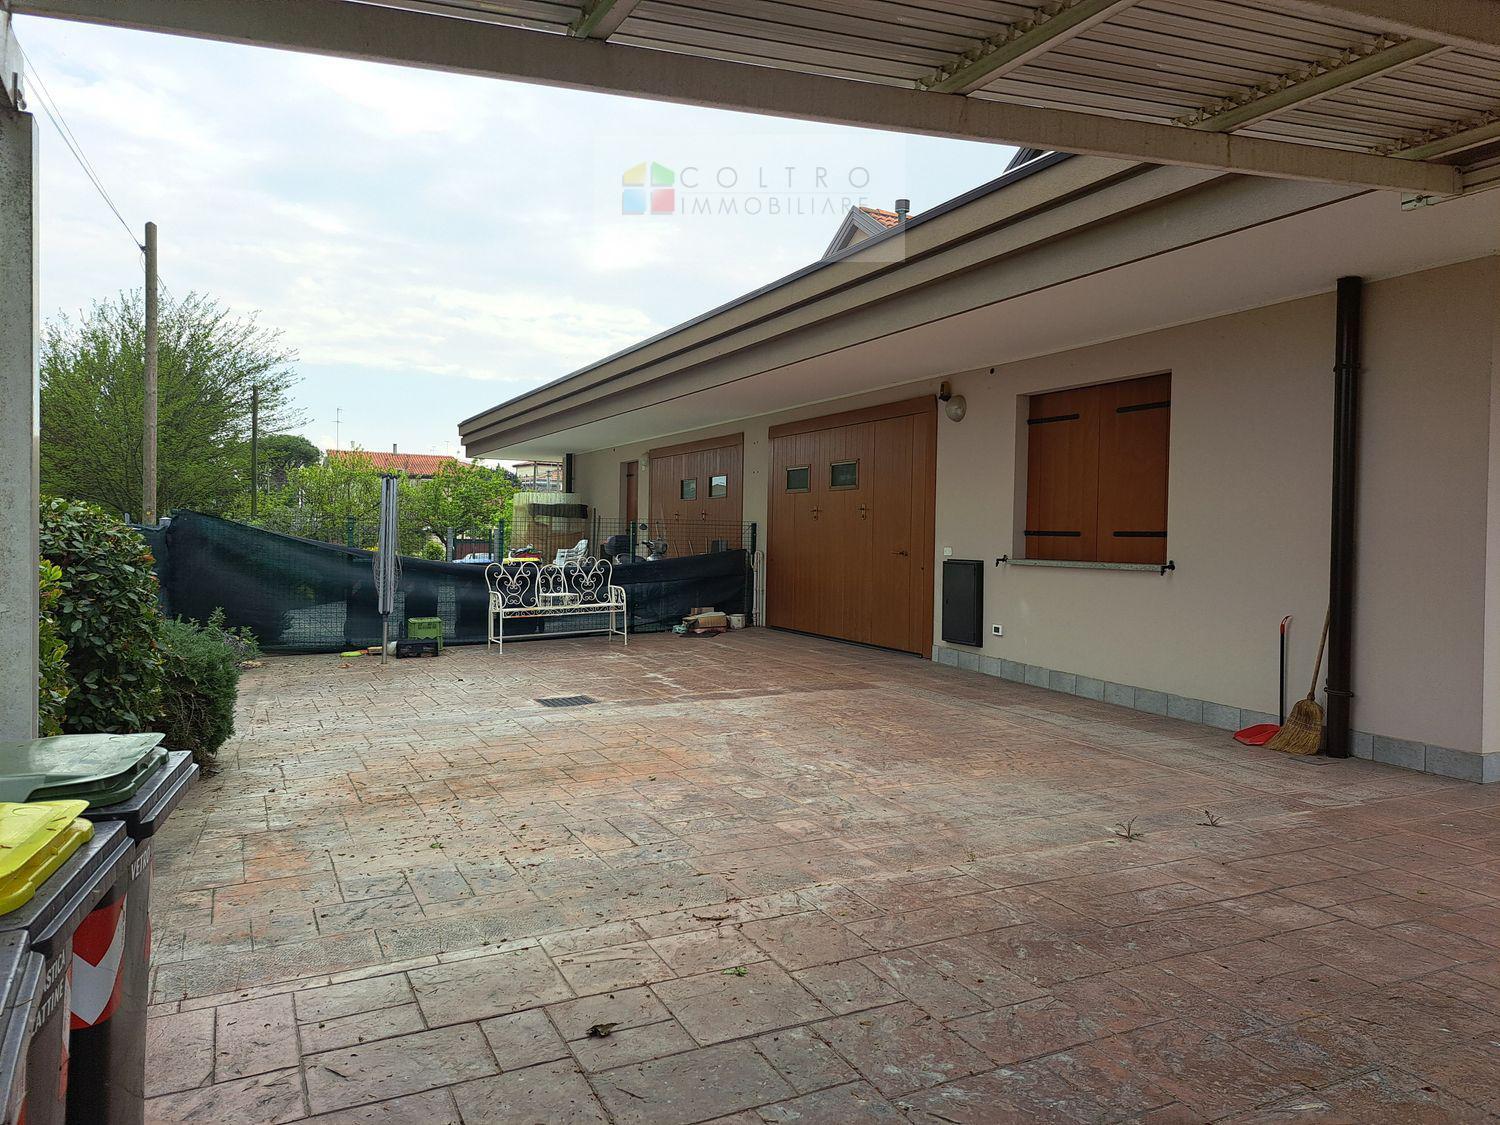 Foto 42 di 46 - Villa a schiera in vendita a Padova